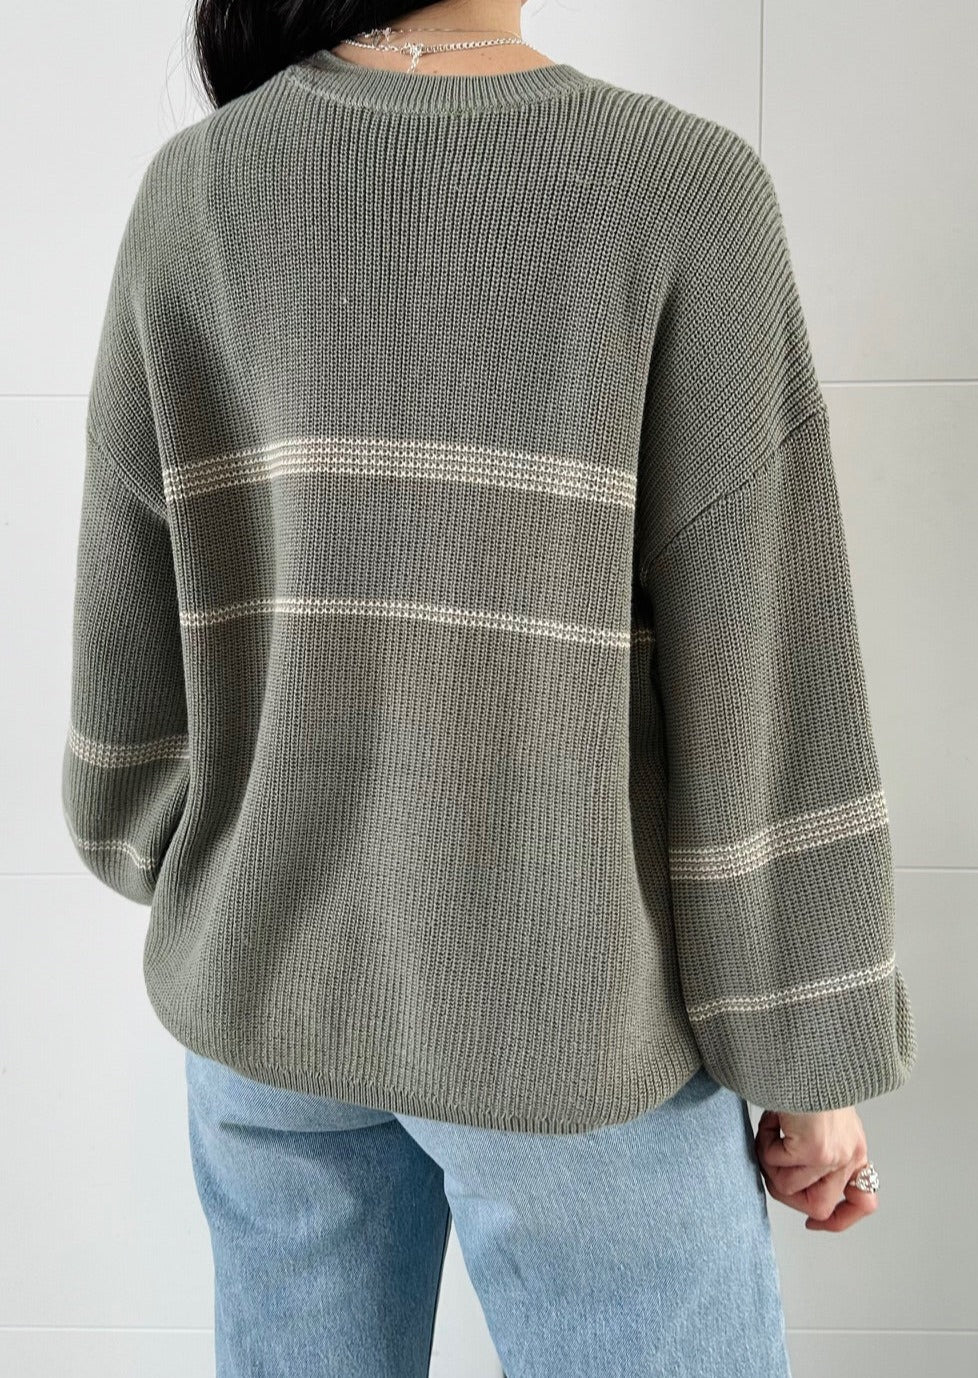 Fonda Fern Stripe Pullover Sweater